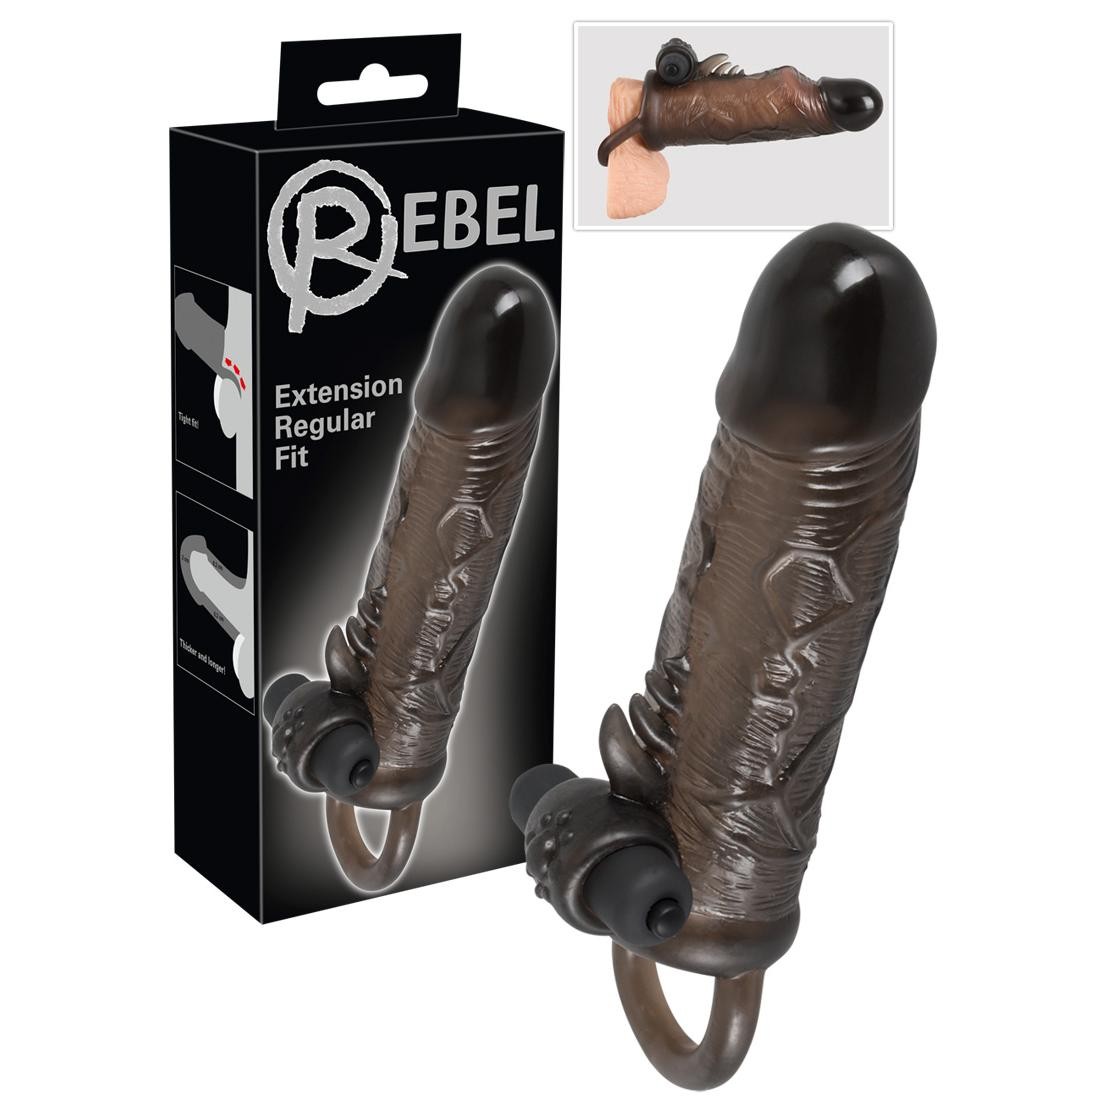  Rebel  -  Rebel  Extension  Regular  Fit  -  Penissleeve 